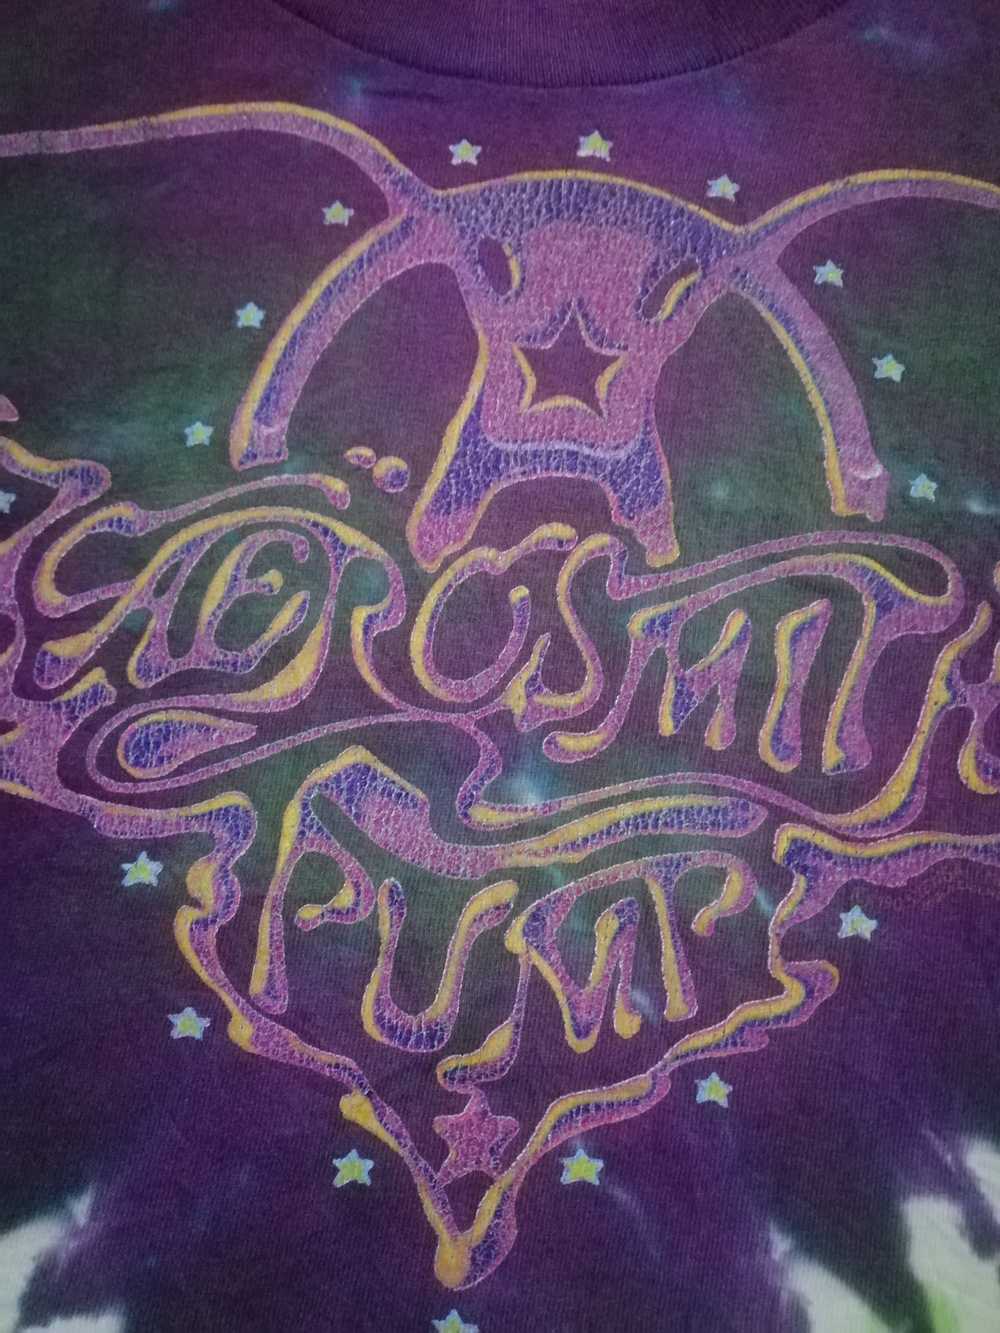 Vintage 1990 Aerosmith Pump Tour Shirt - image 6